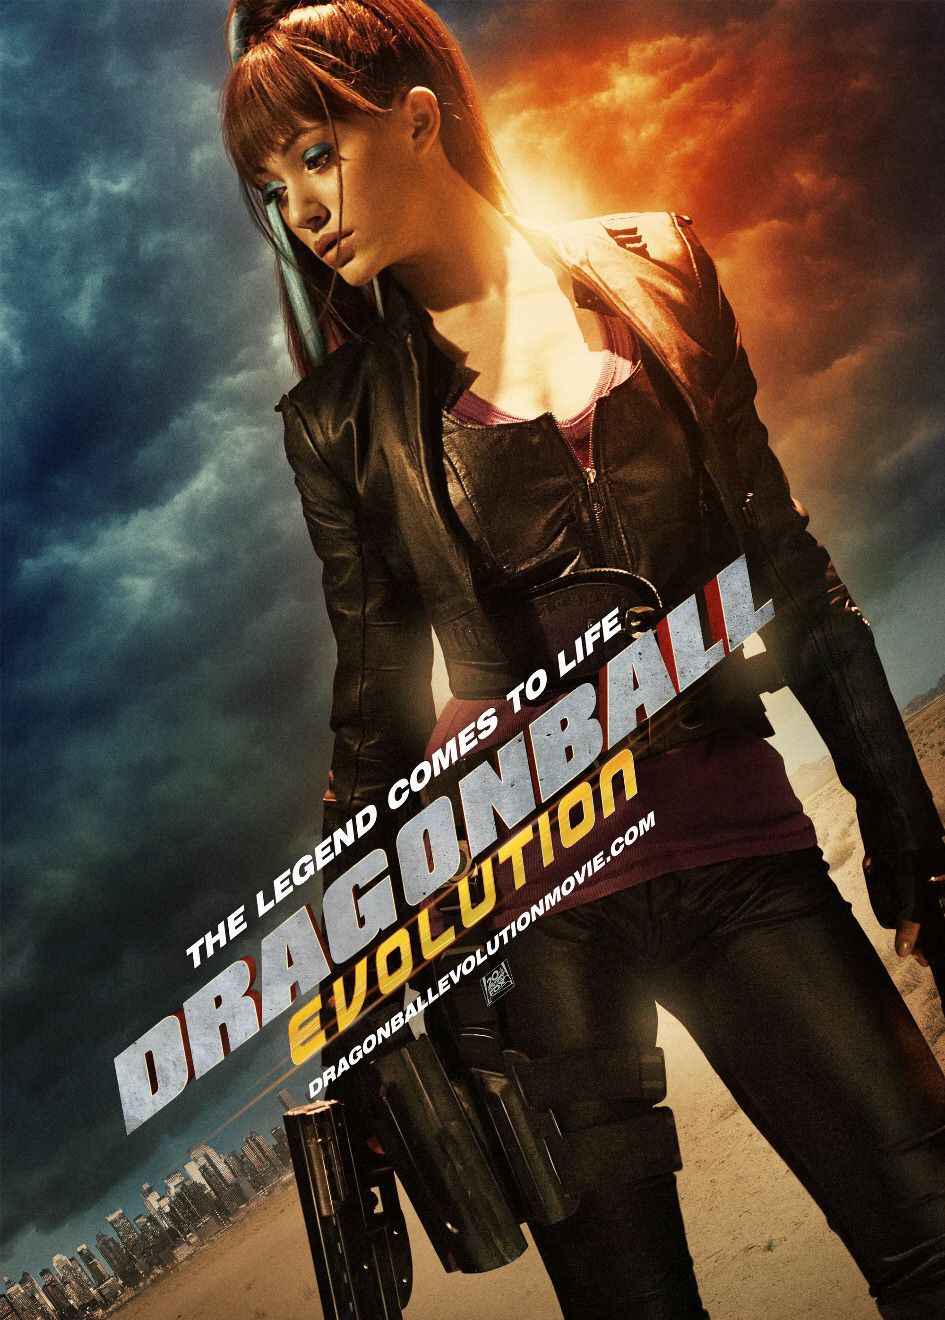 Dragonball Evolution (2009) - IMDb